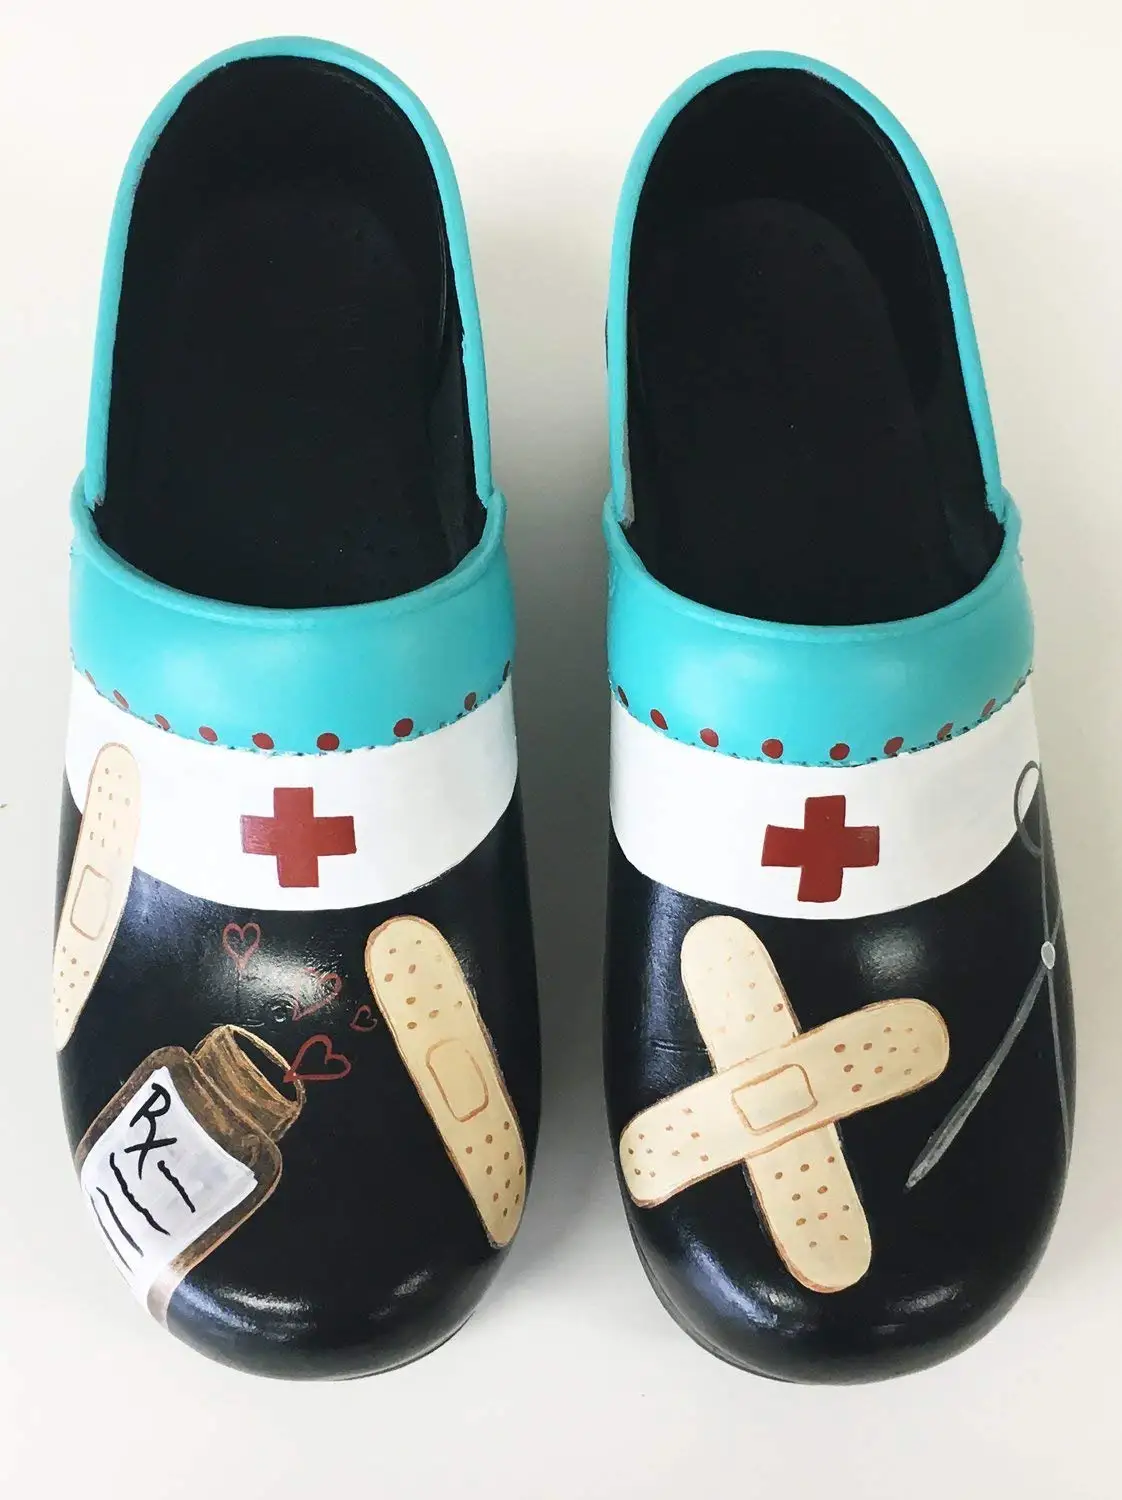 dansko nursing shoes clearance